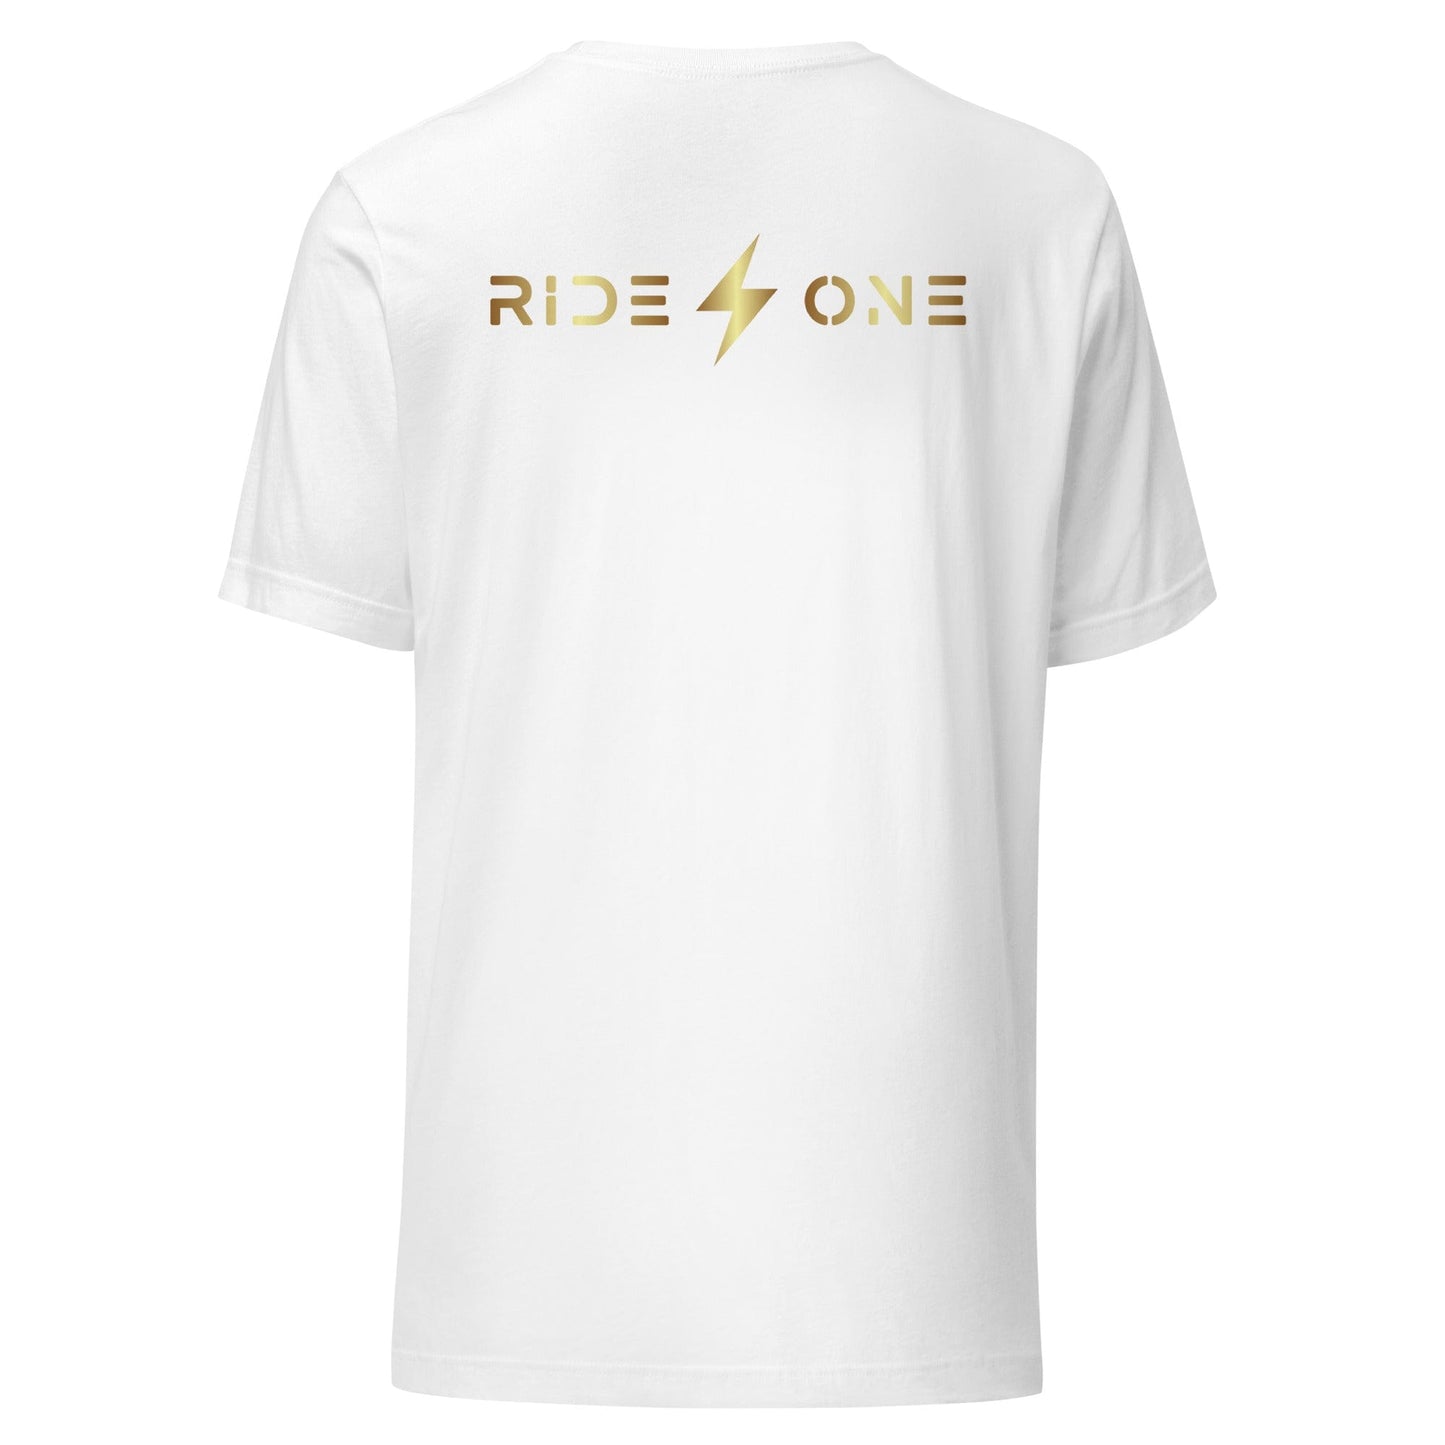 Ride One clothing Unisex t-shirt (Ride One)